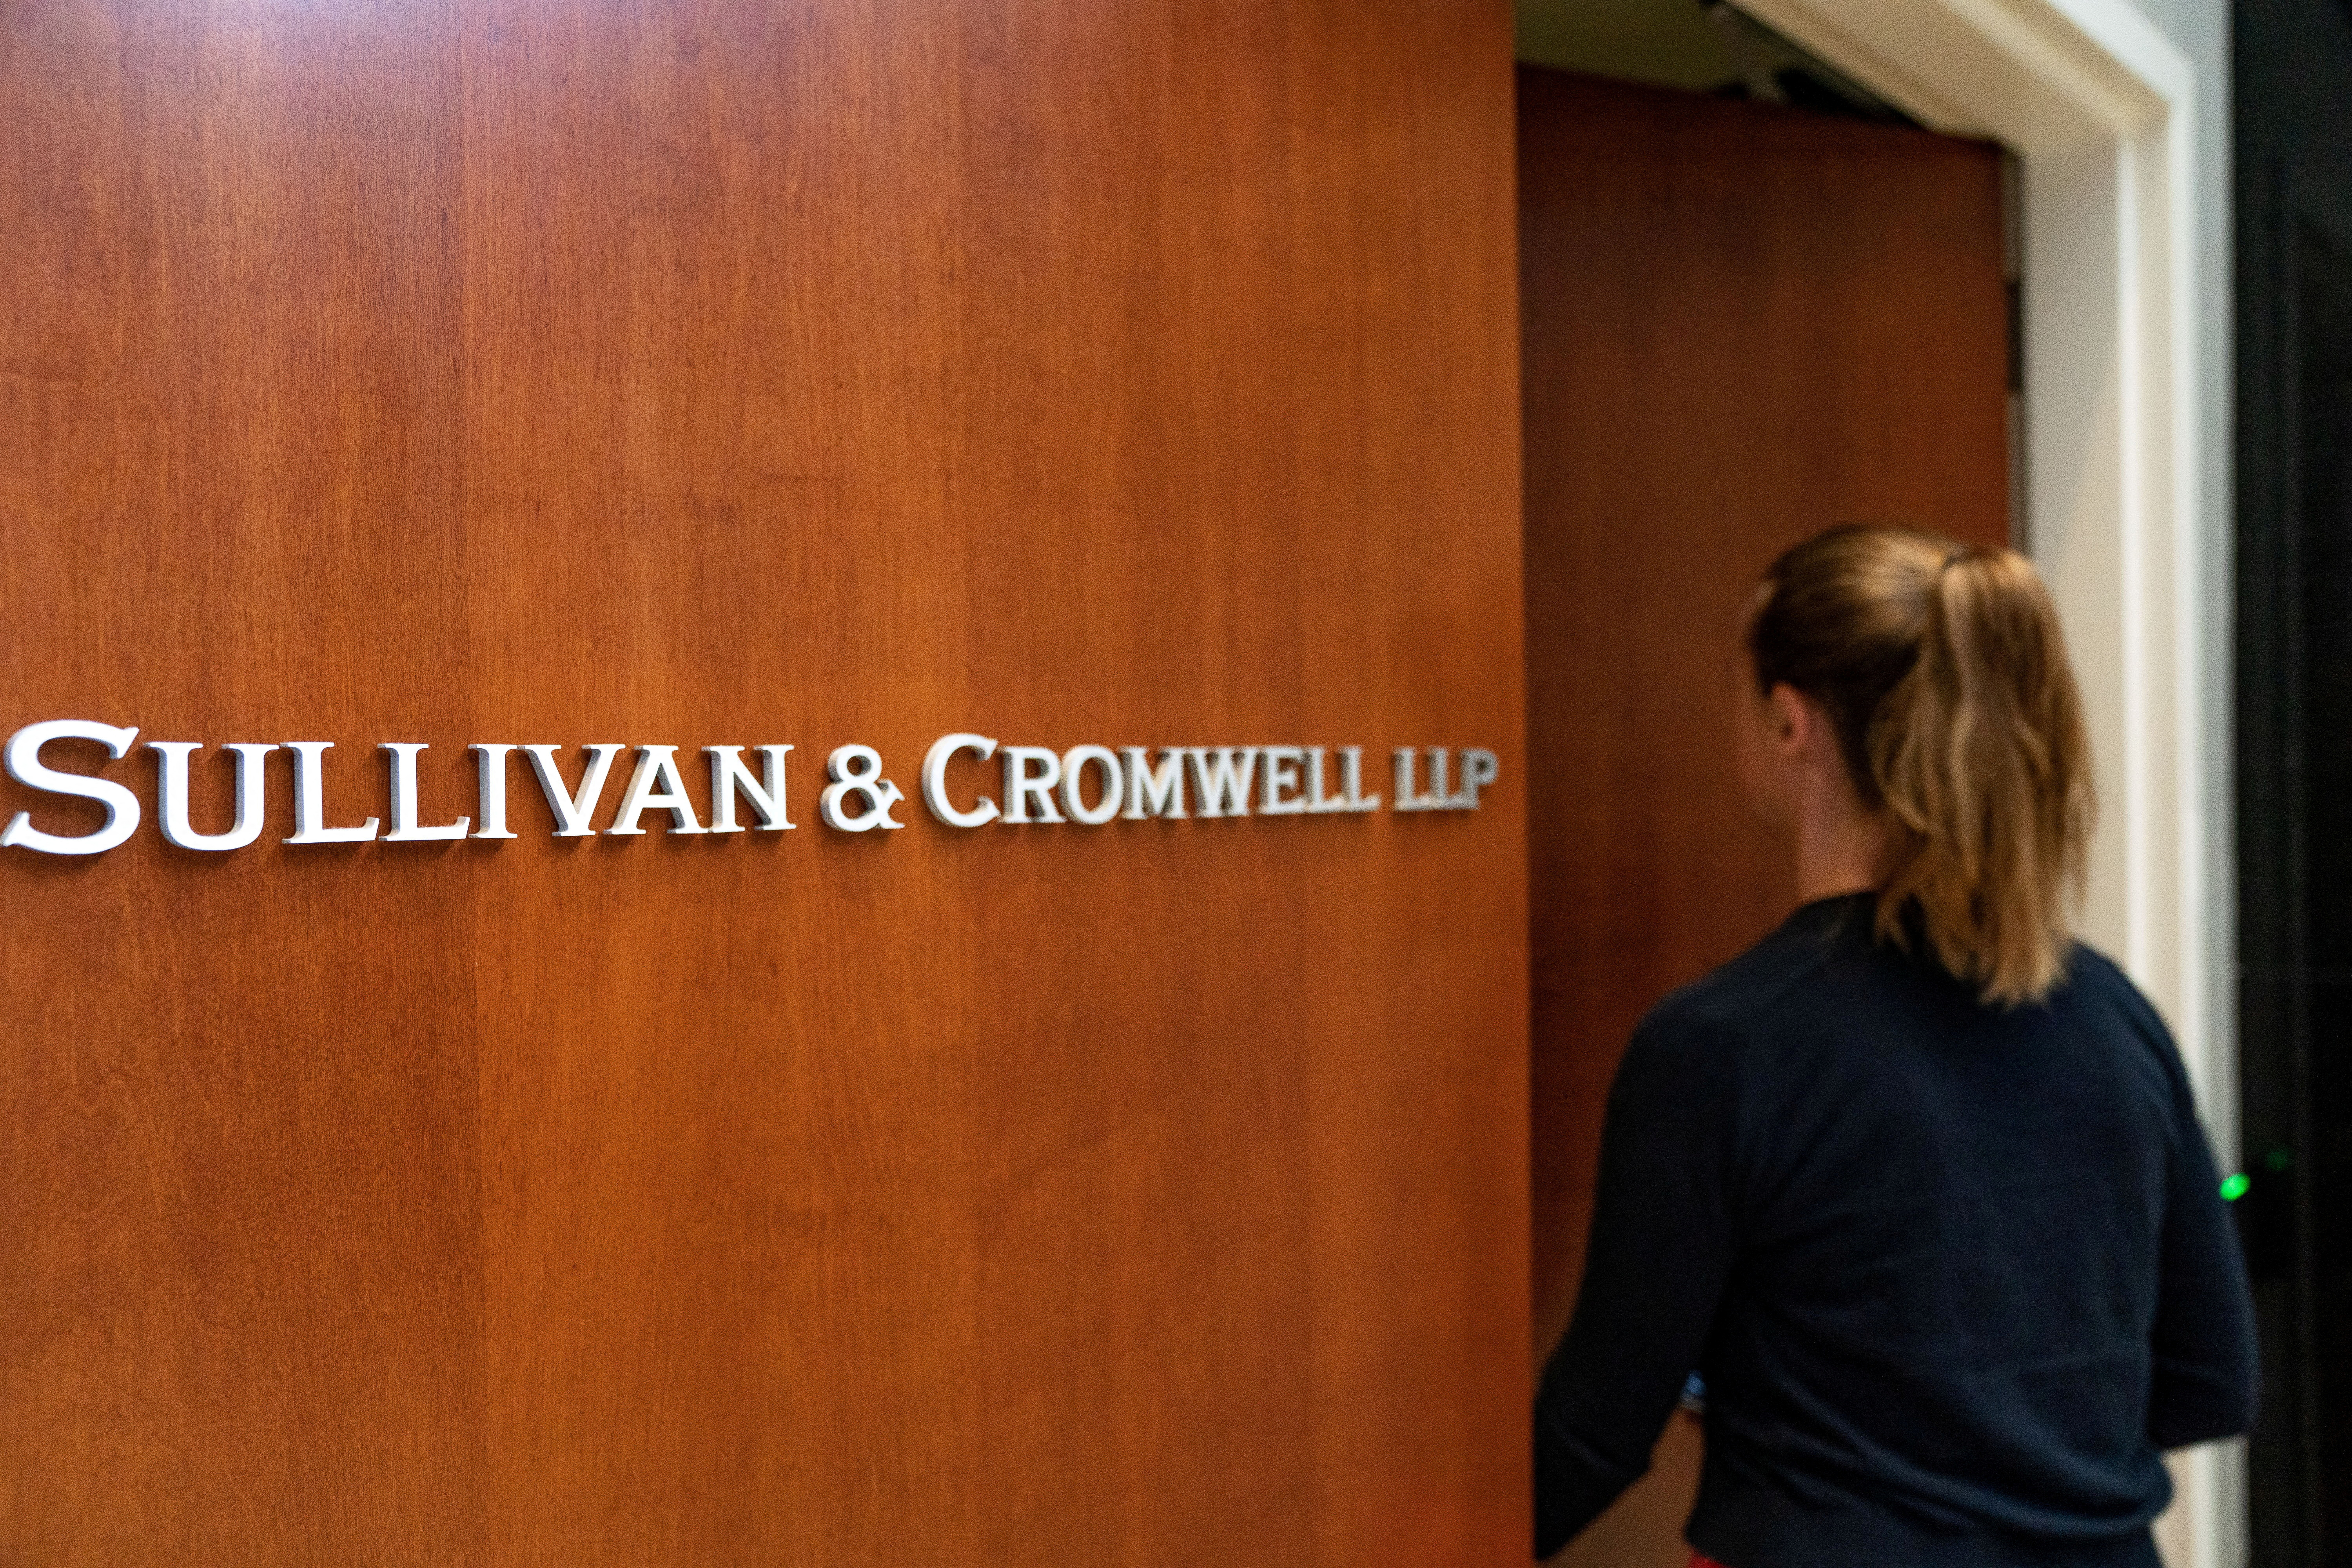 Sullivan Cromwell law firm